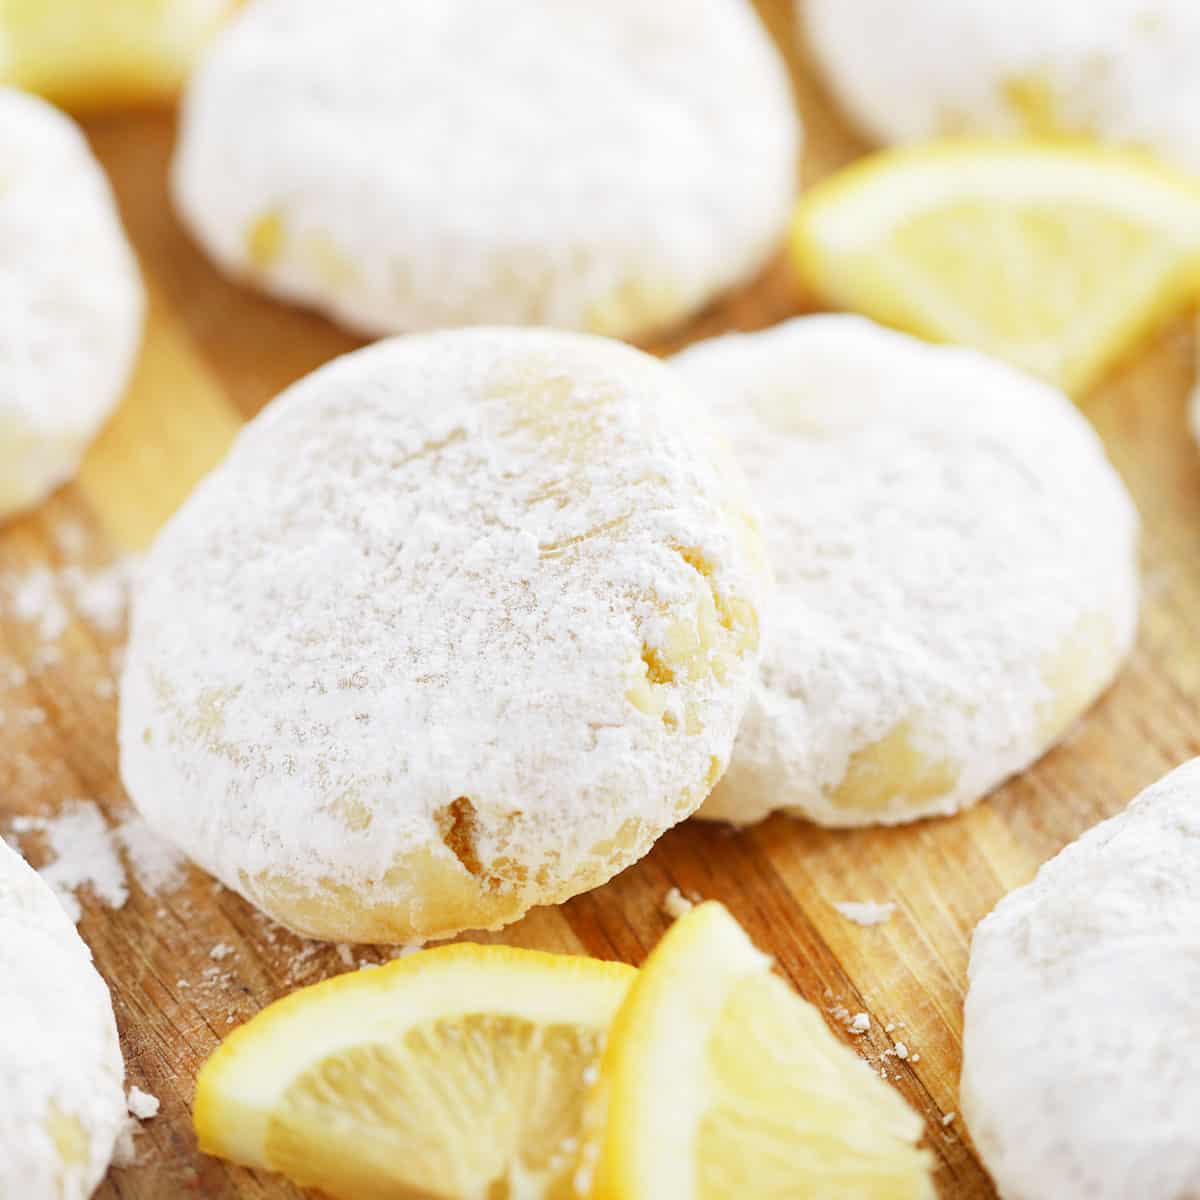 lemon cooler cookies with powdered sugar coating